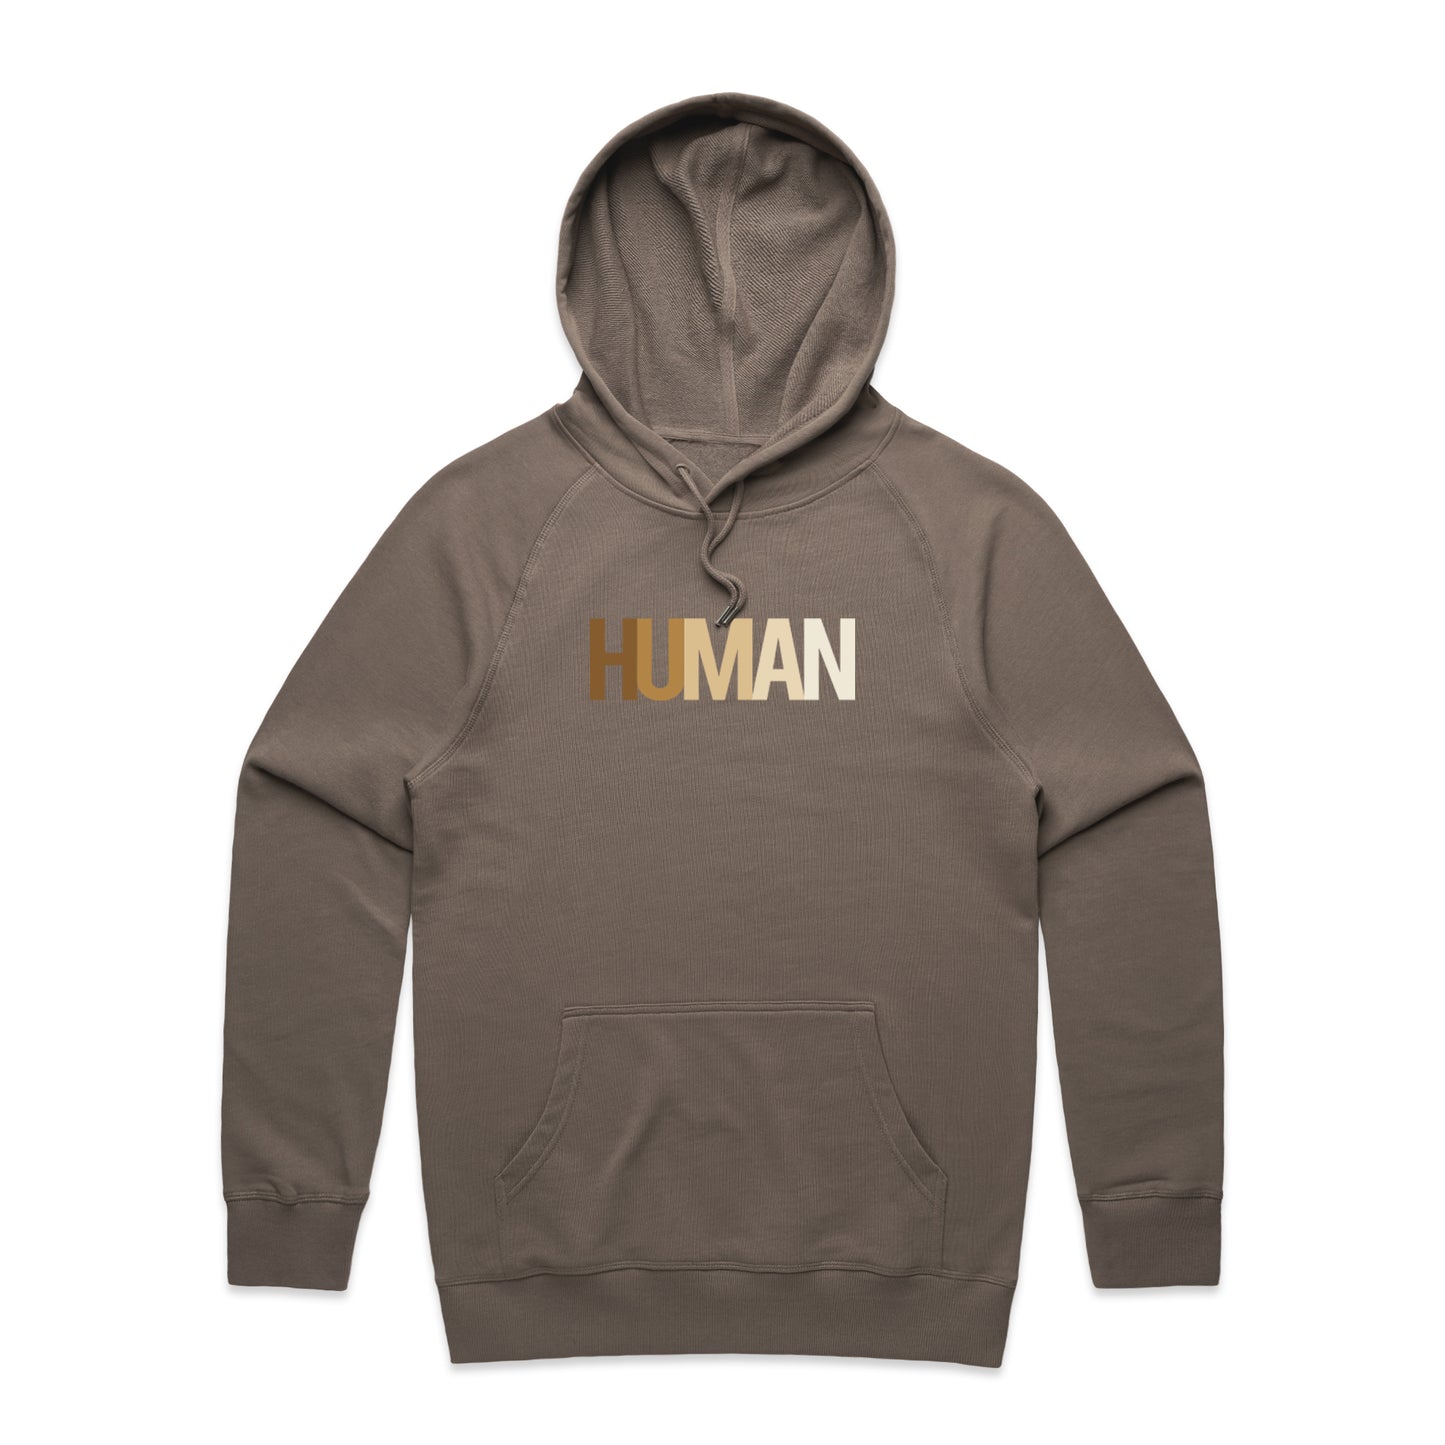 Human Premium Hoody